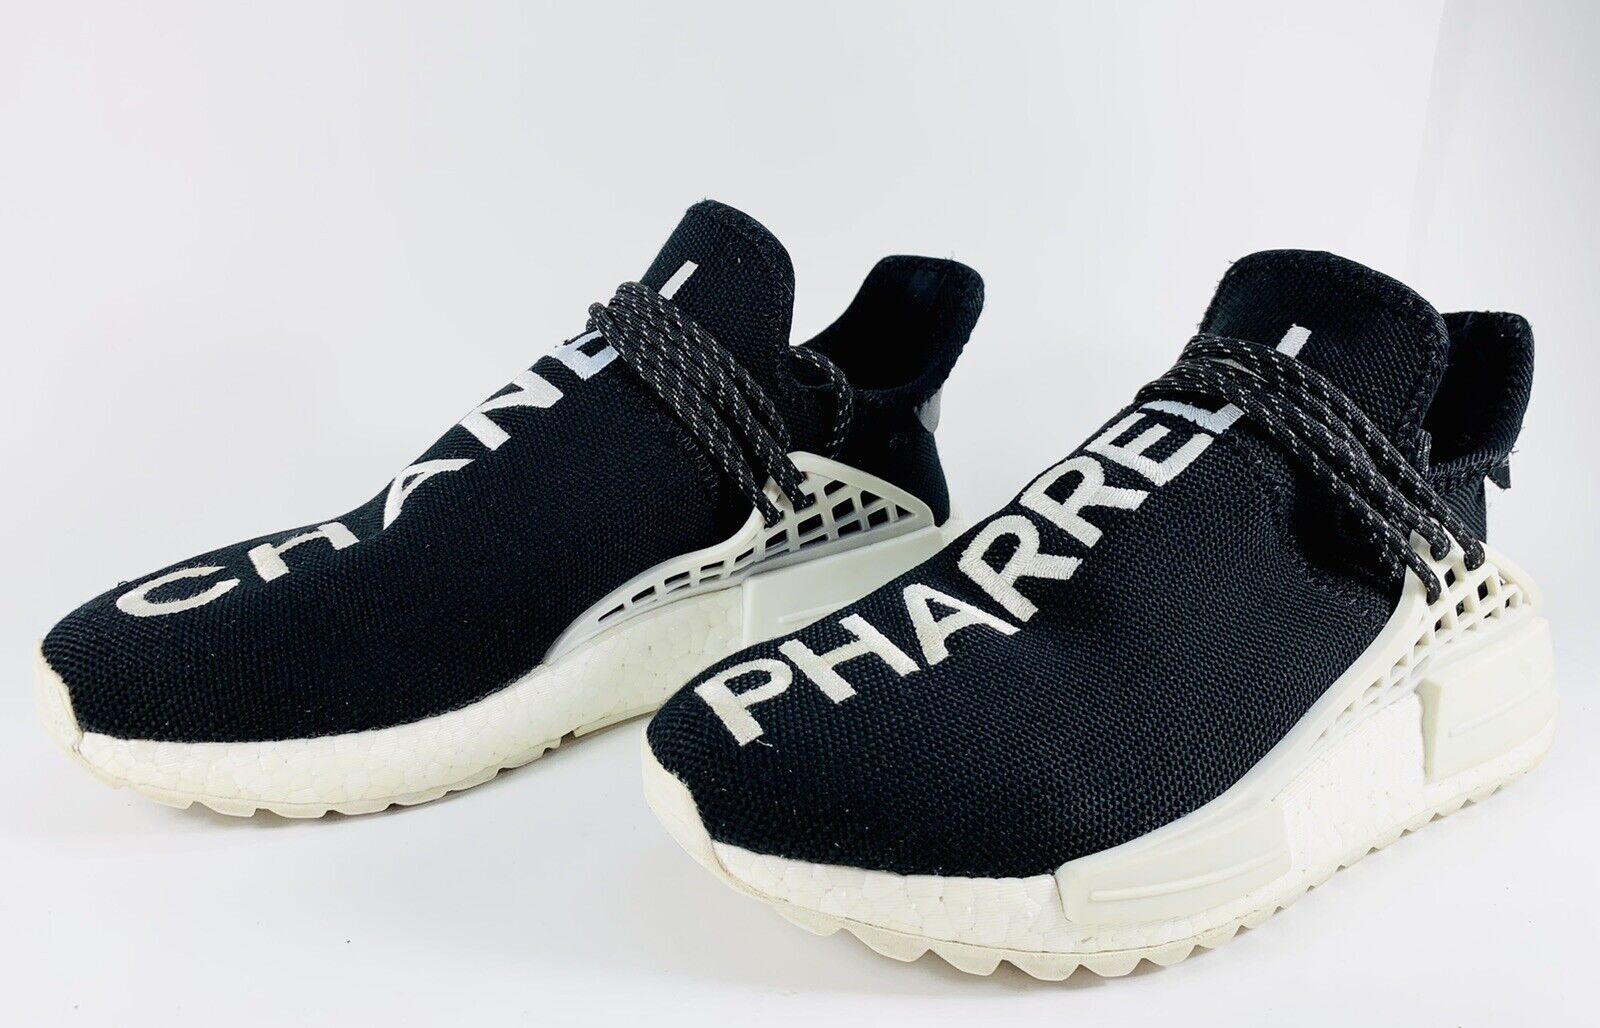 Adidas x Pharrell x Chanel Collaboration Shoes Used Size US7 UK6,5 EU40 Rare